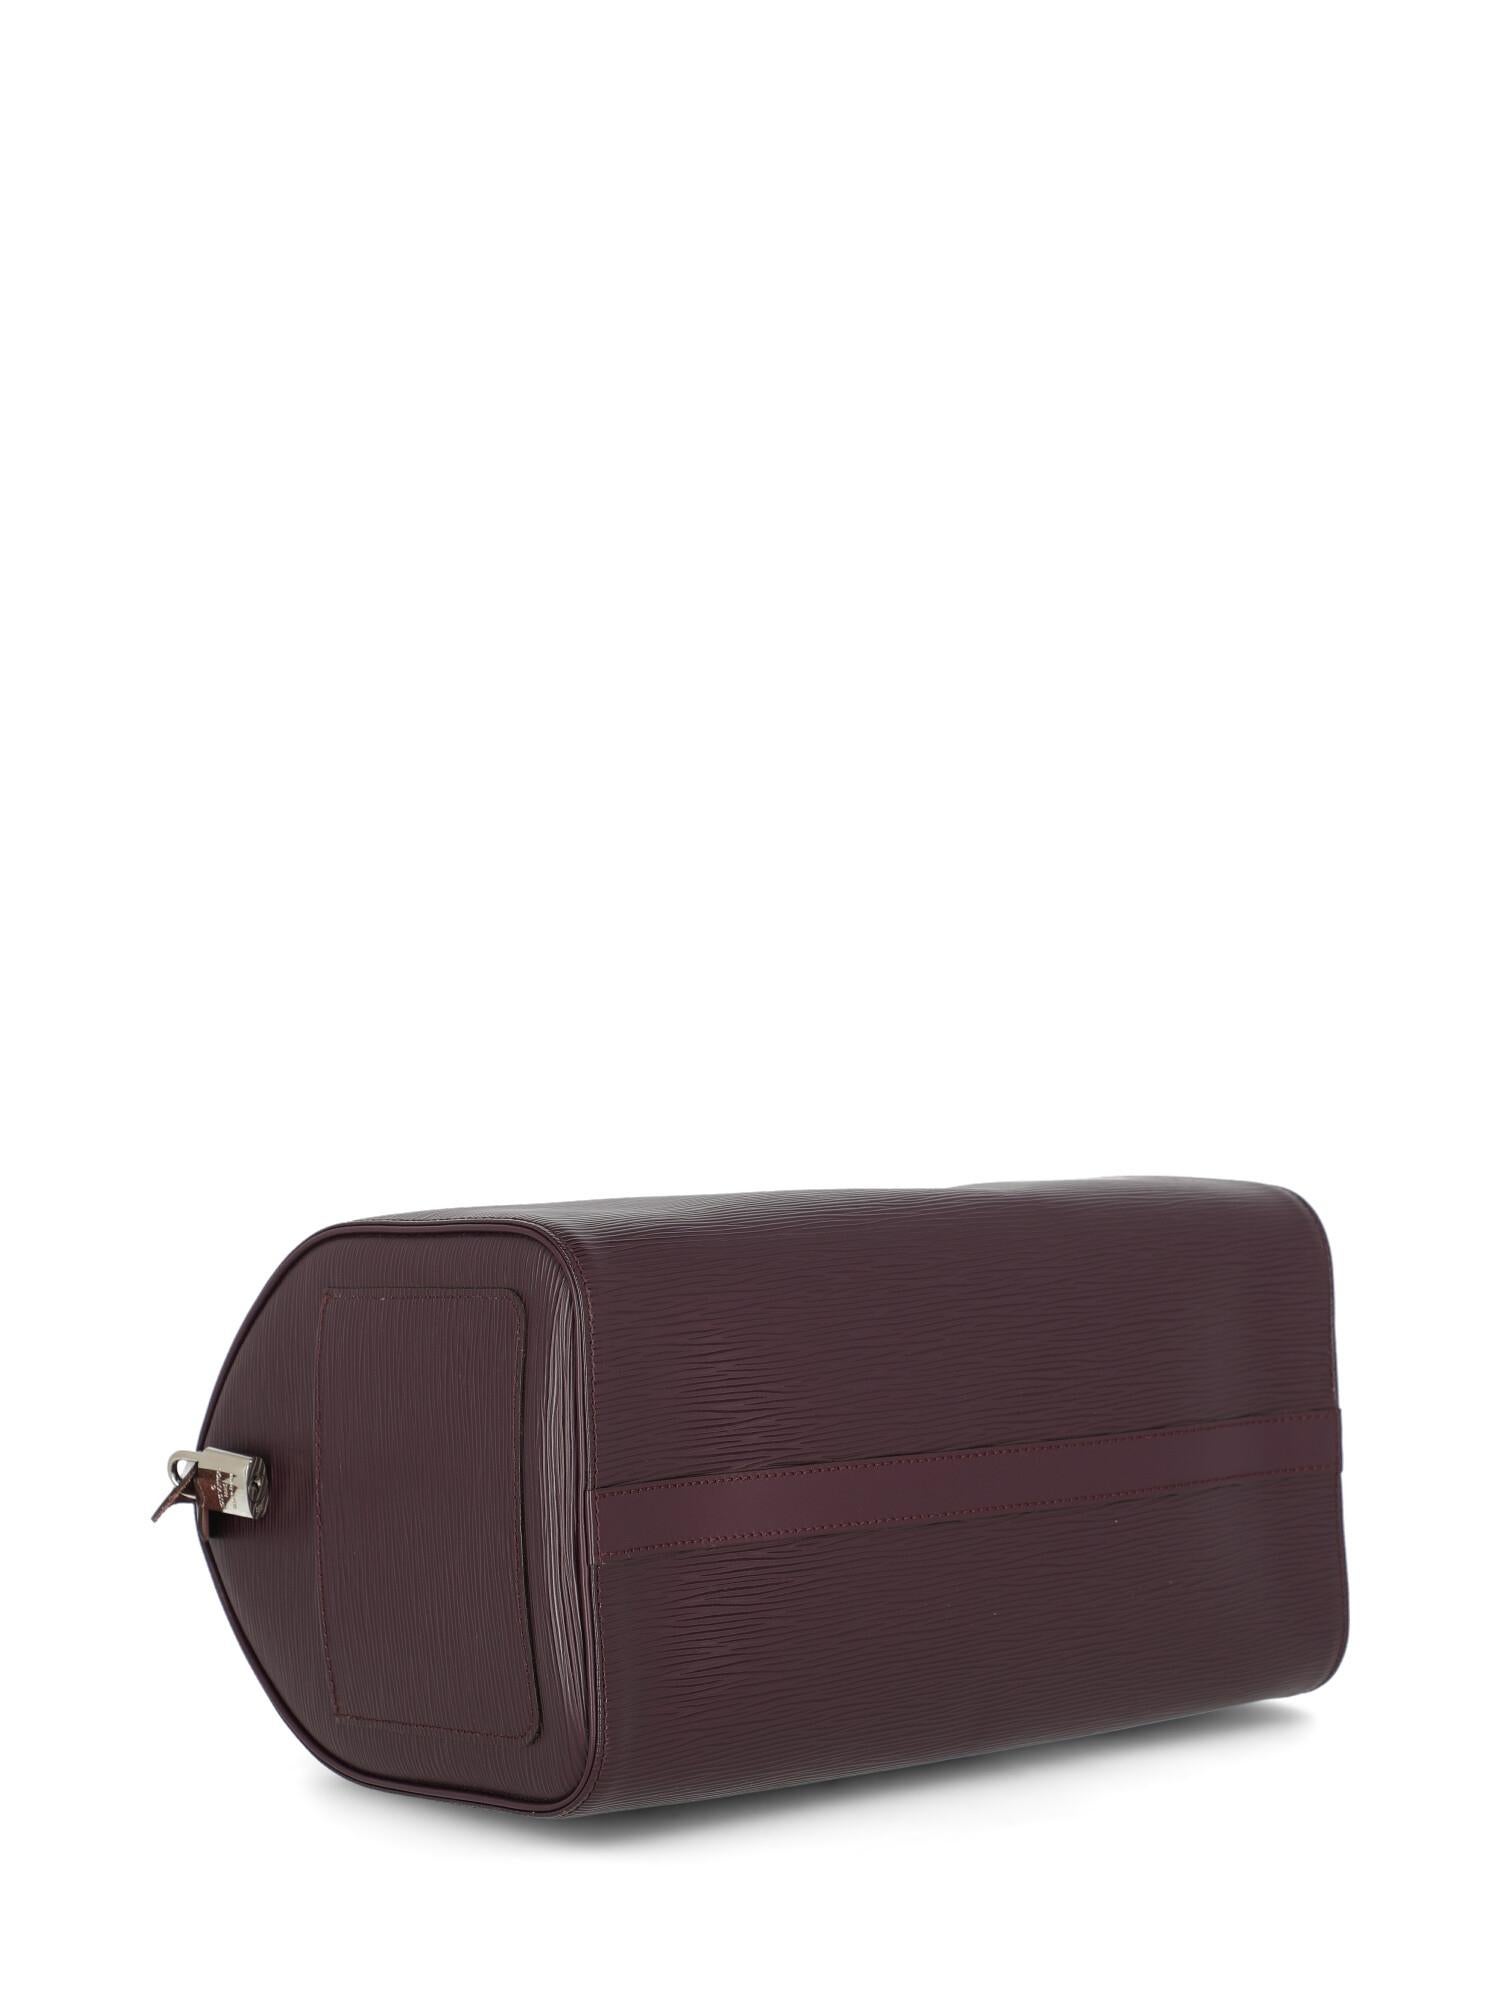 Women's Louis Vuitton Woman Handbag Speedy 35 Purple Leather For Sale